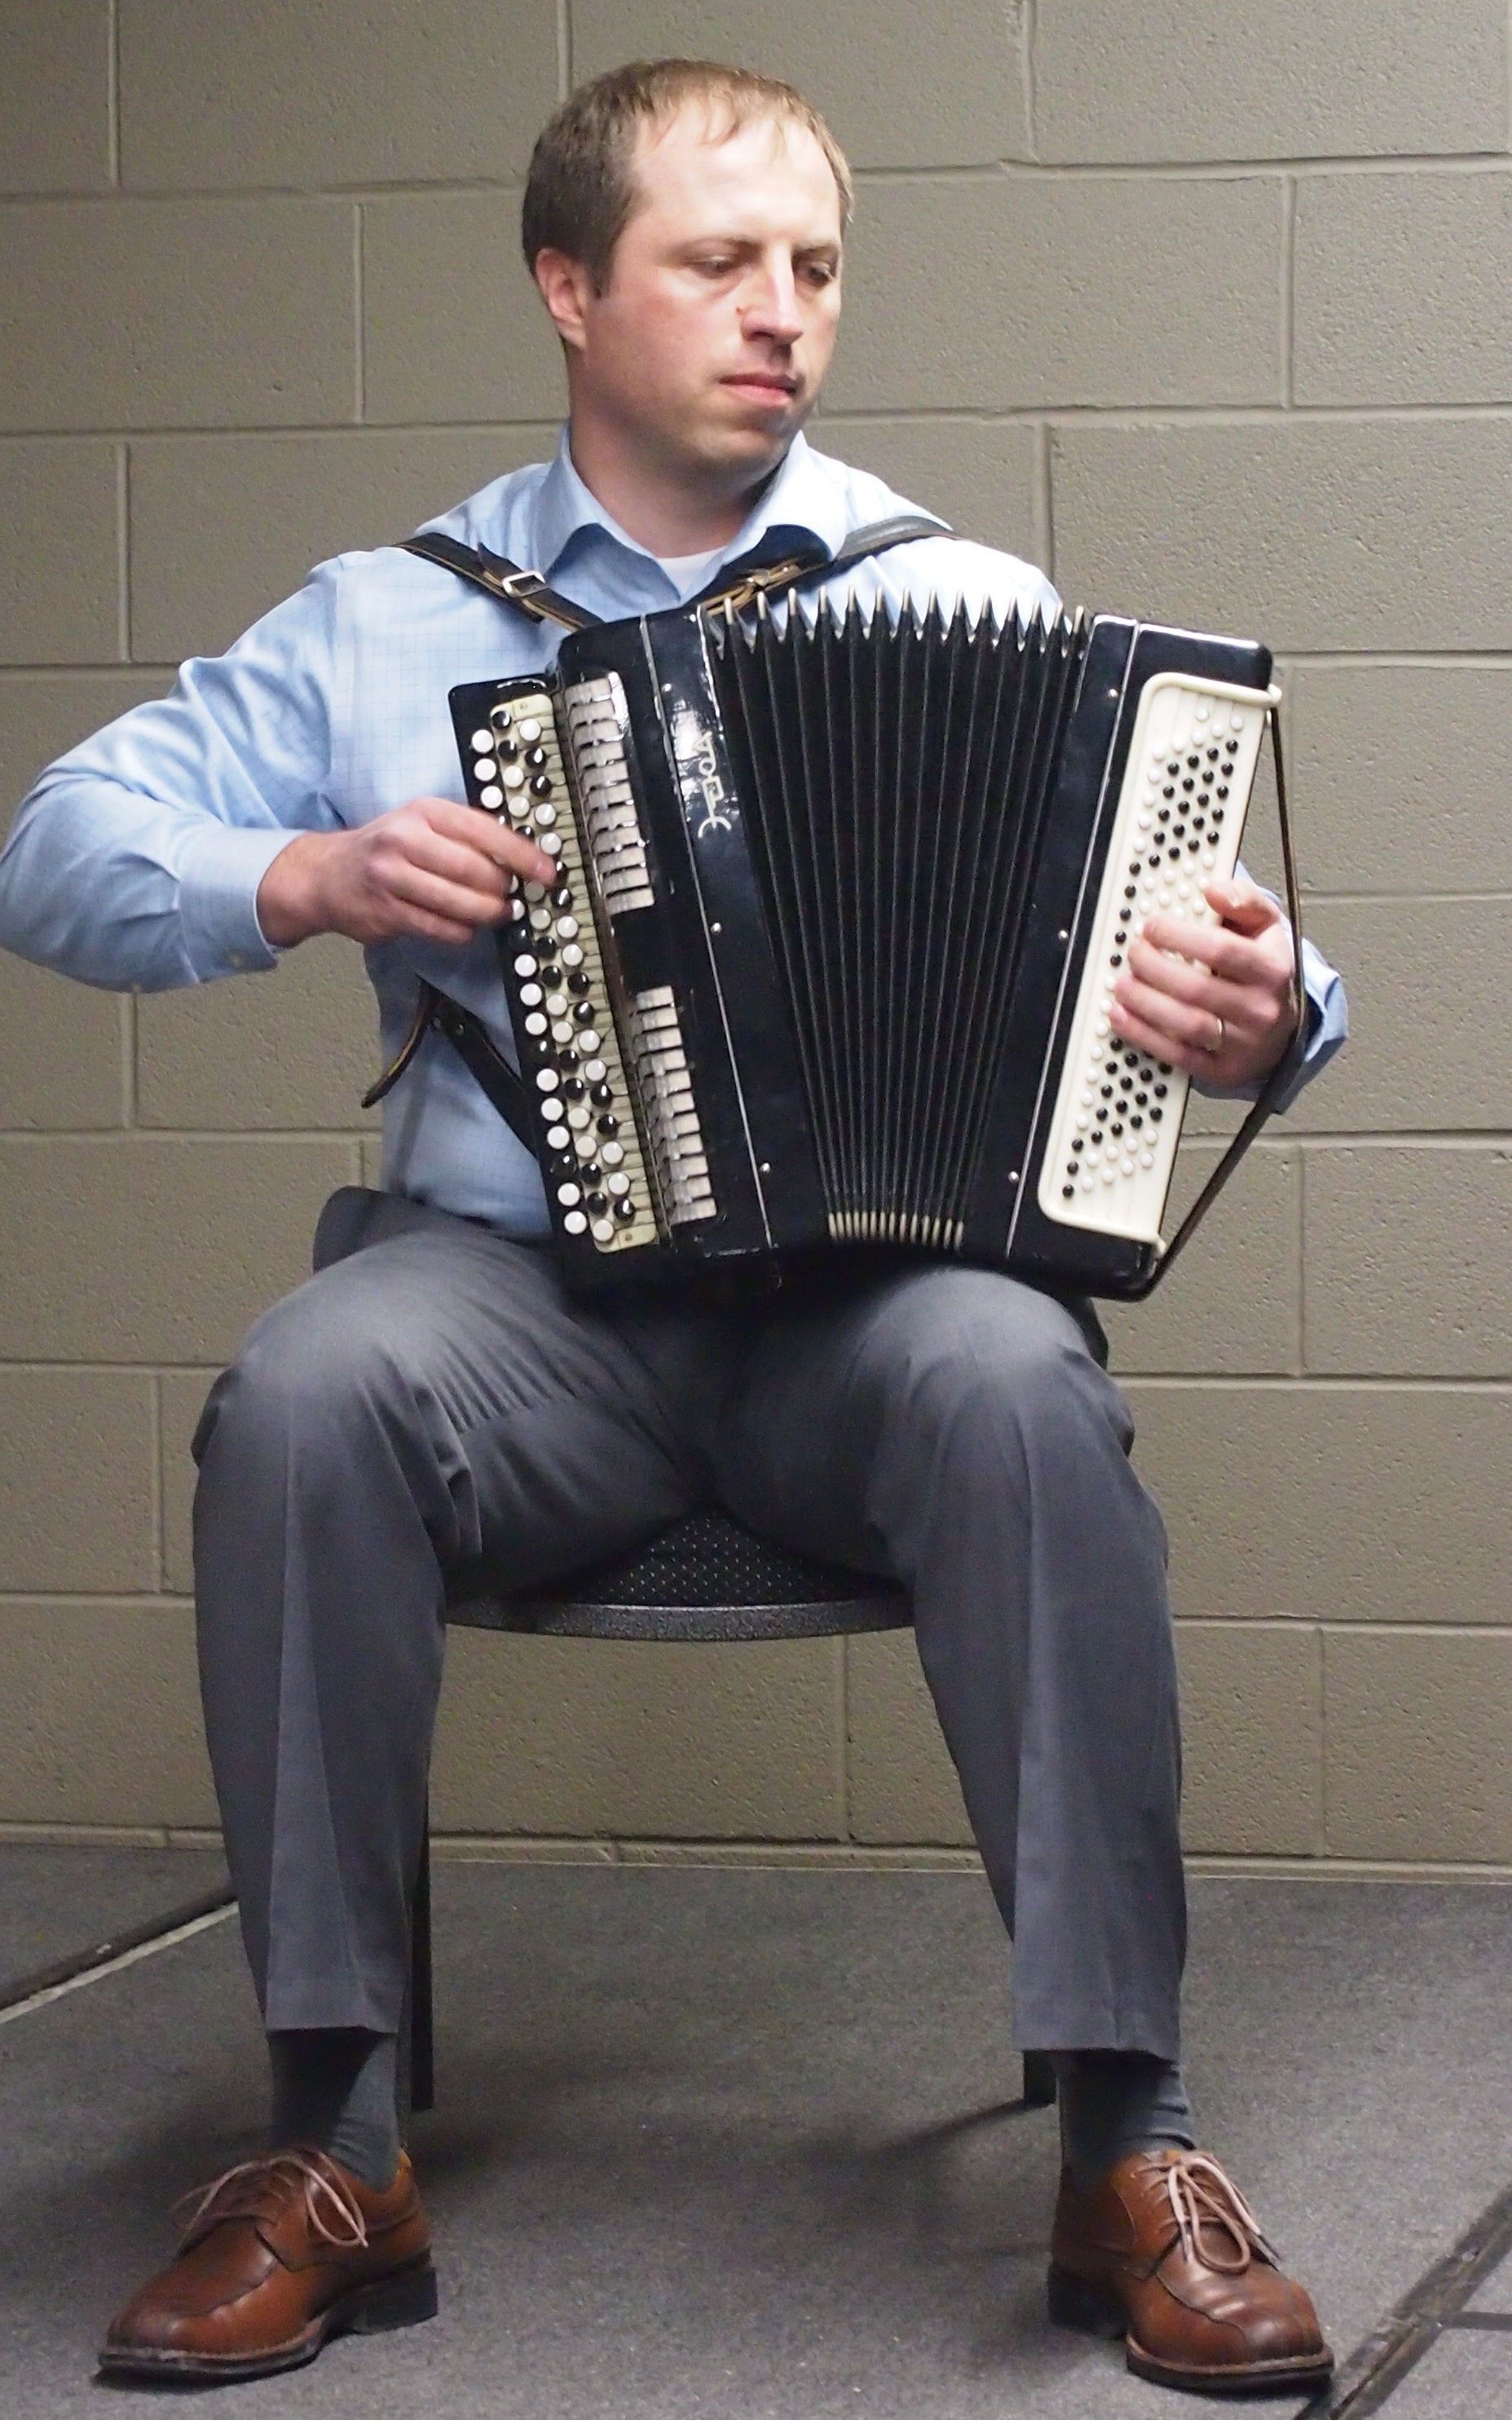 Mikalai Kliashchuk and his accordion